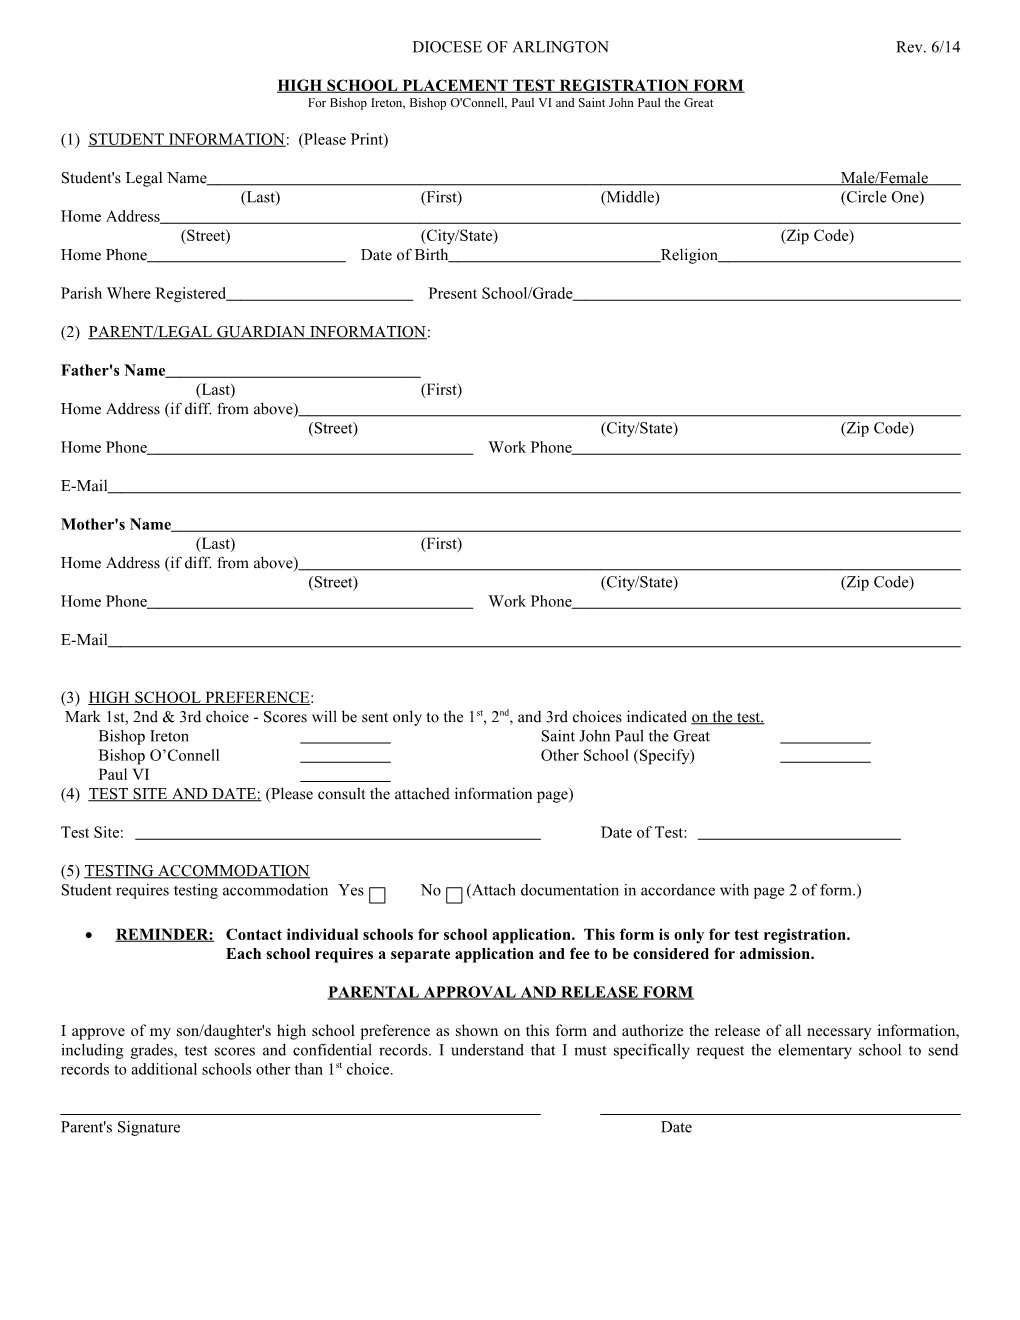 High School Placement Test Registration Form